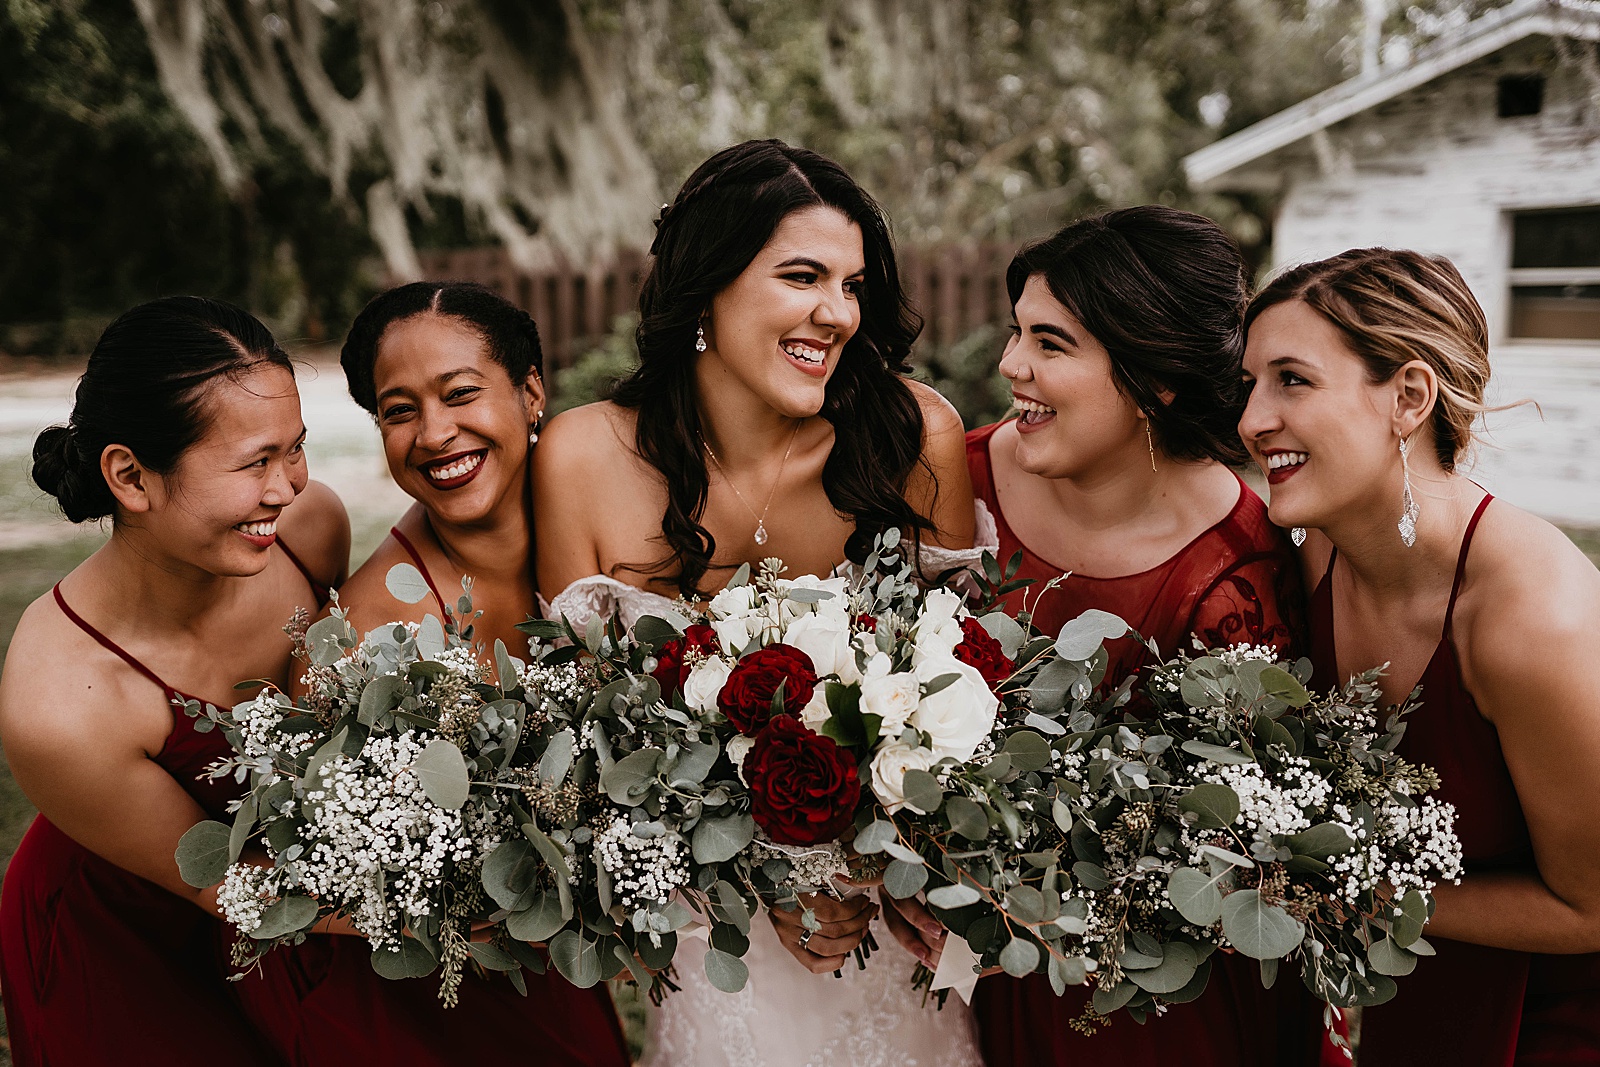 Rustic Fall Farm Wedding captured by South Florida Wedding Photographer, Krystal Capone Photography